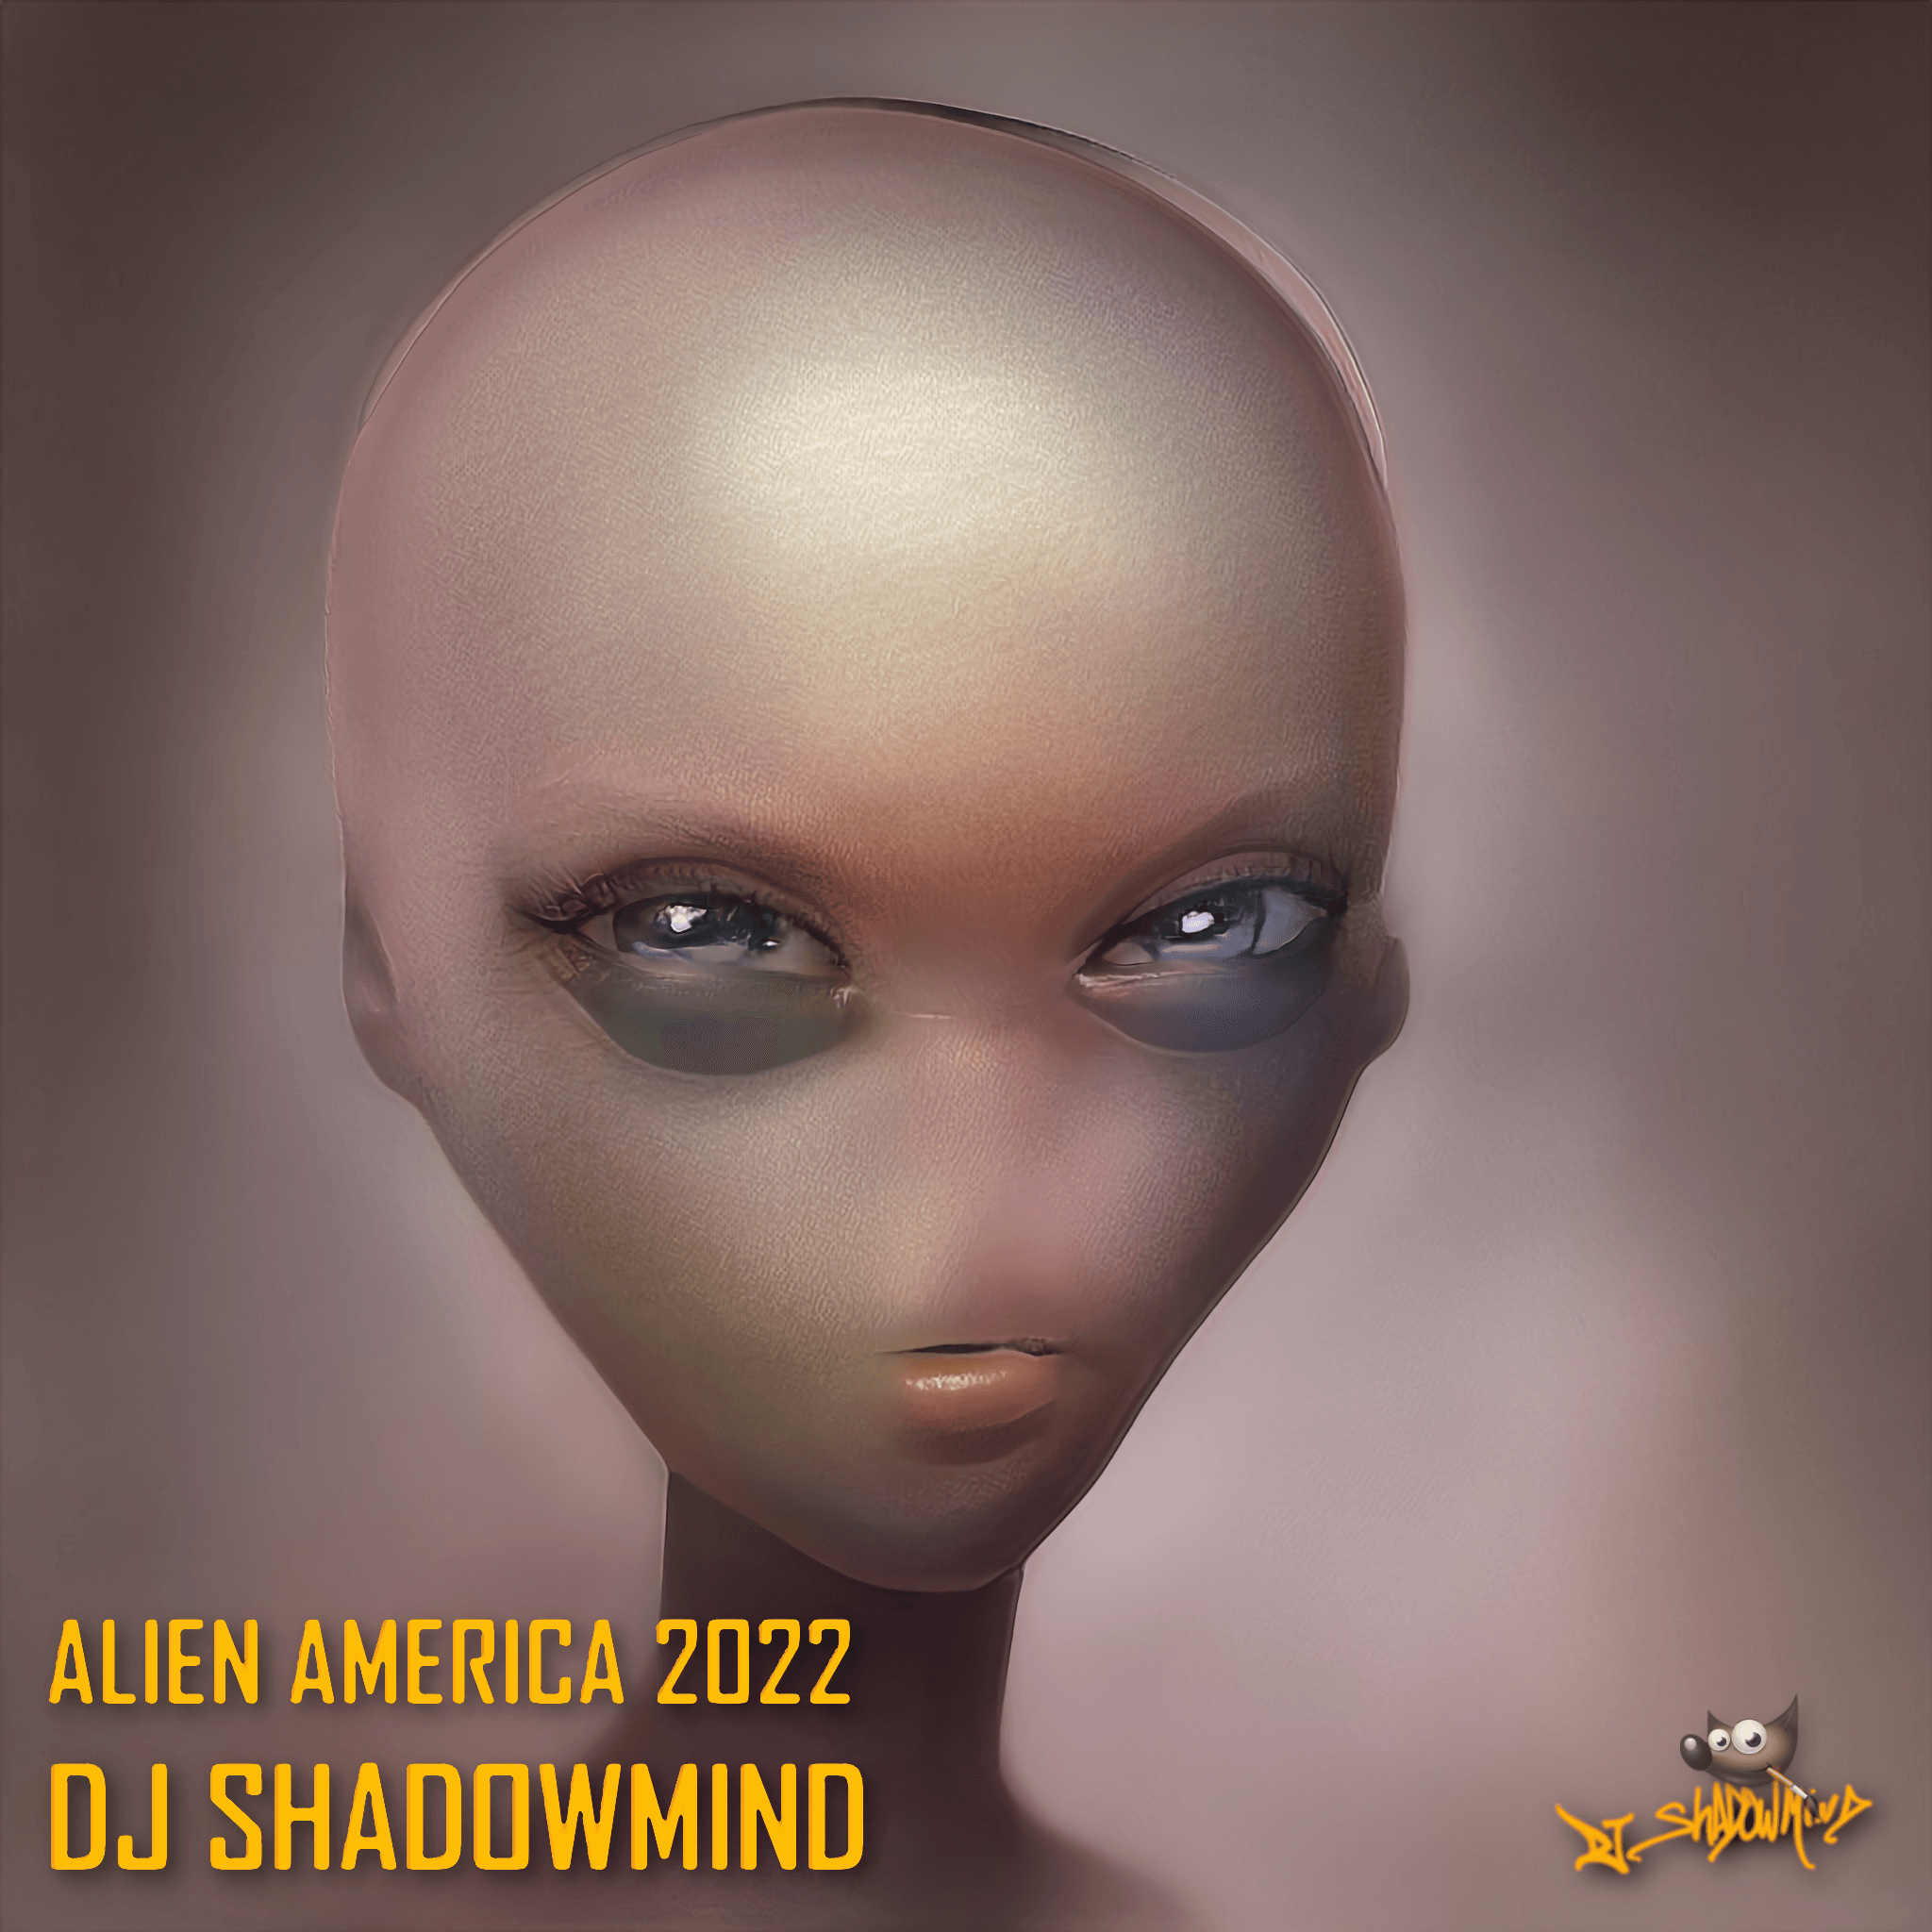 Alien America 2022 - Agent 010